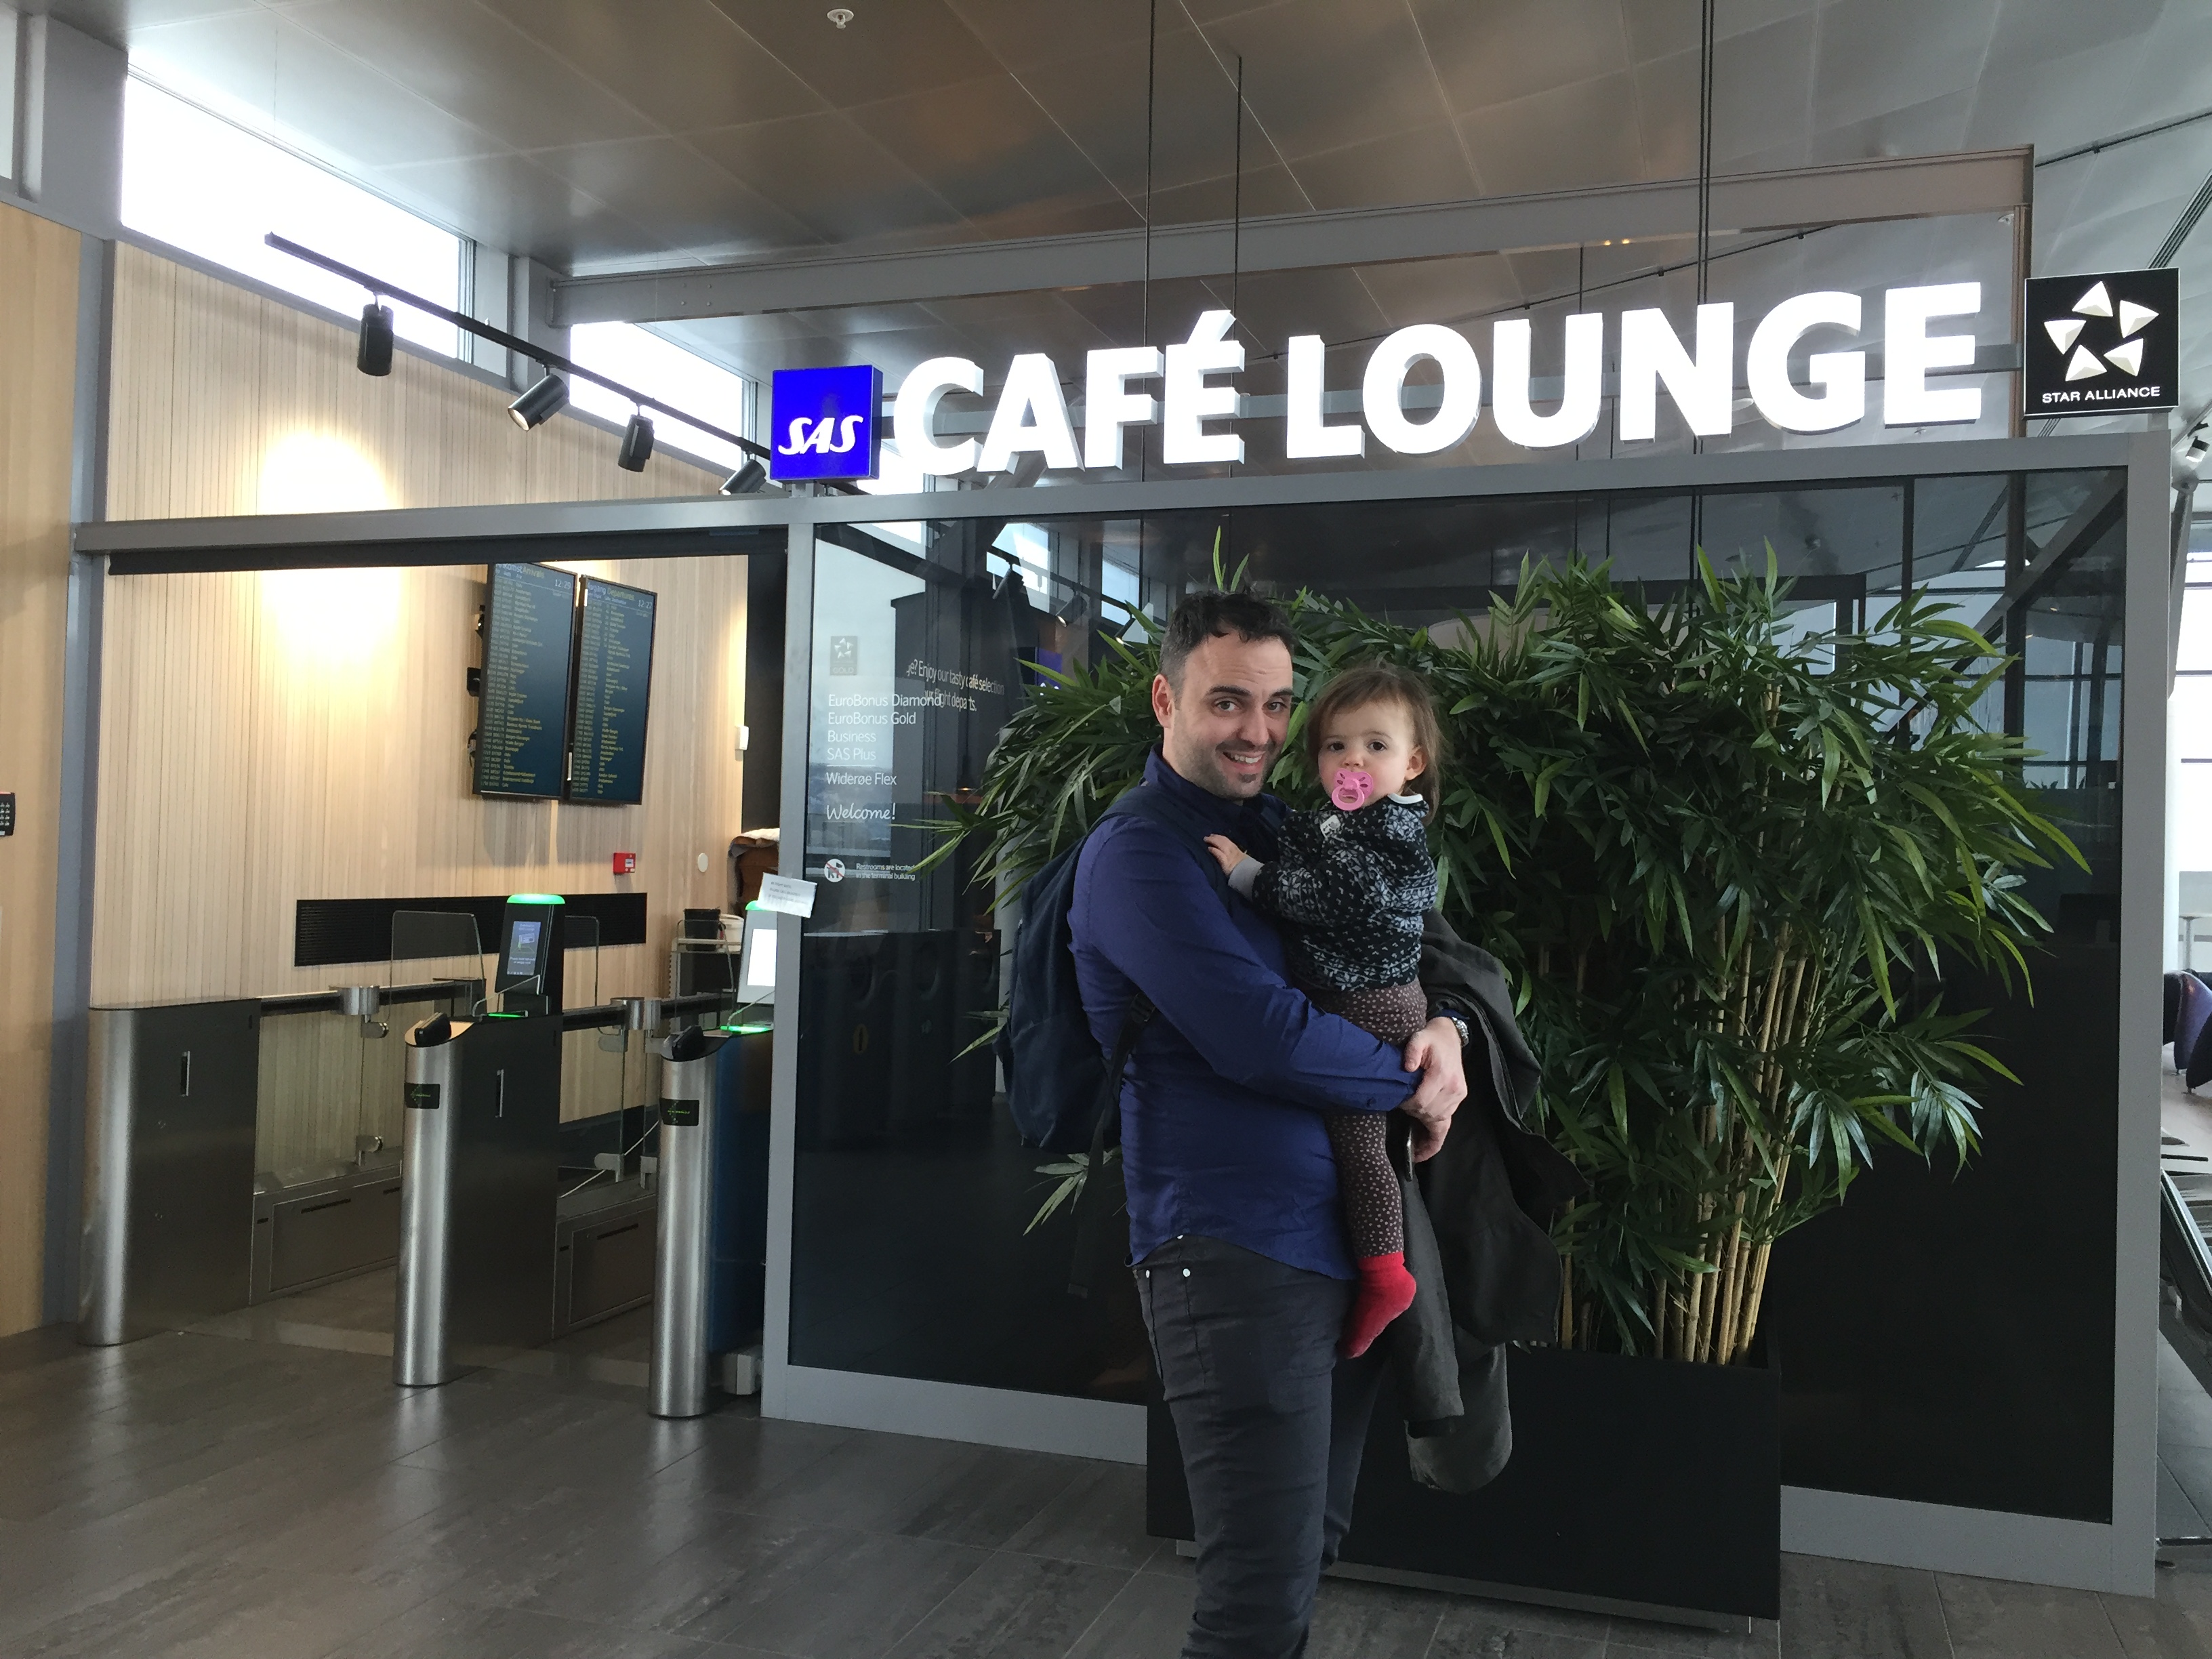 Lounge 3 – SAS Café Lounge in Trondheim